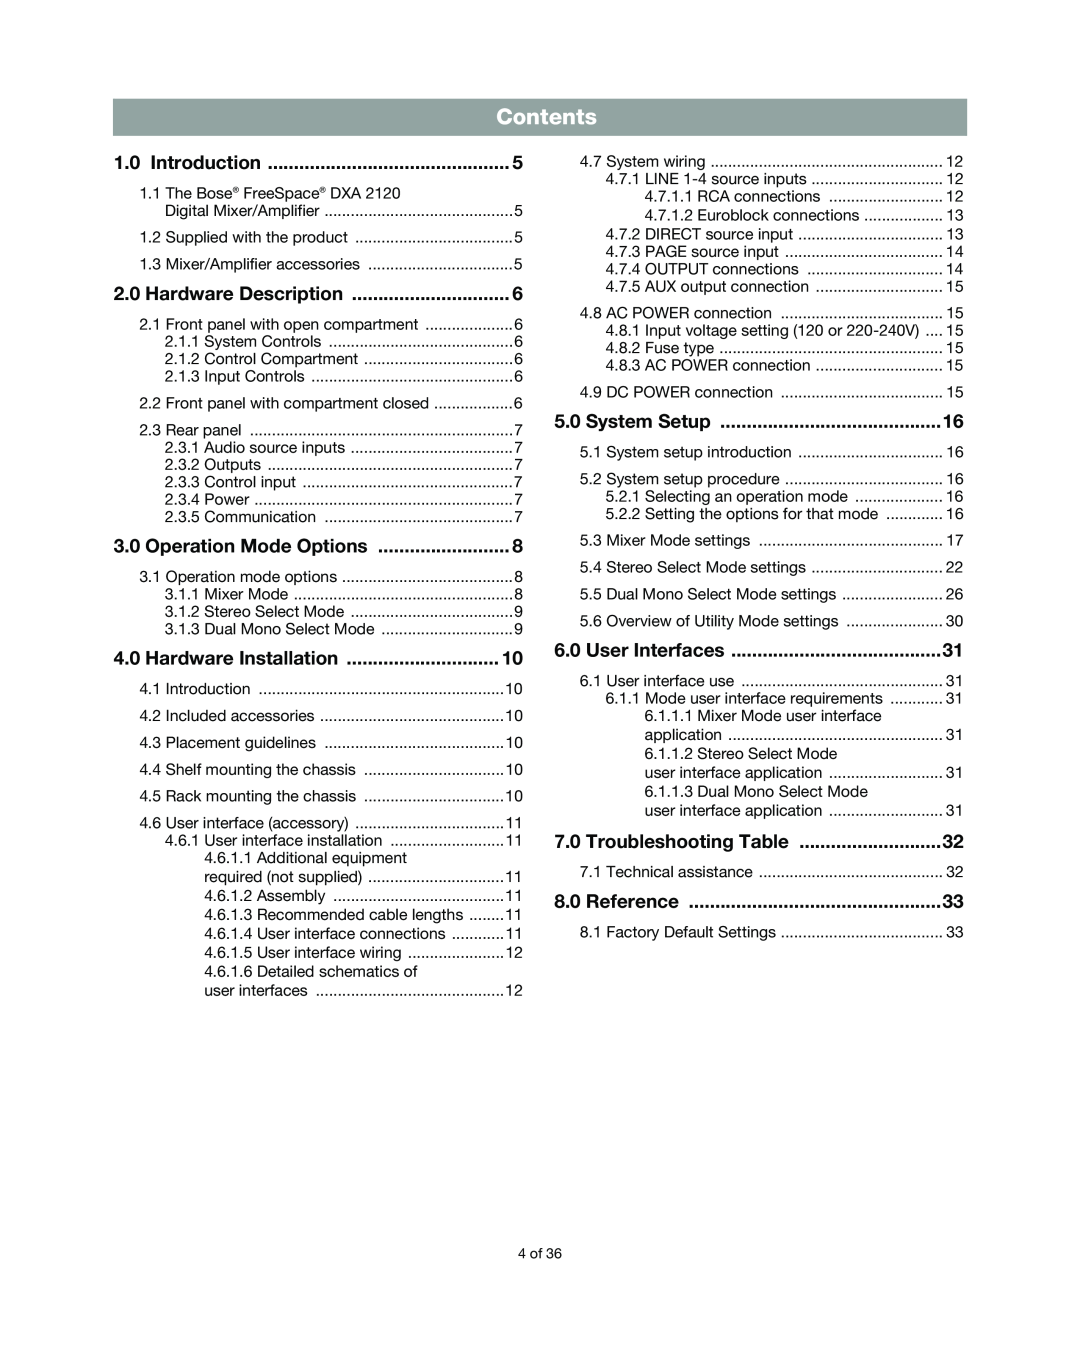 Bose DXA2120 manual Contents 